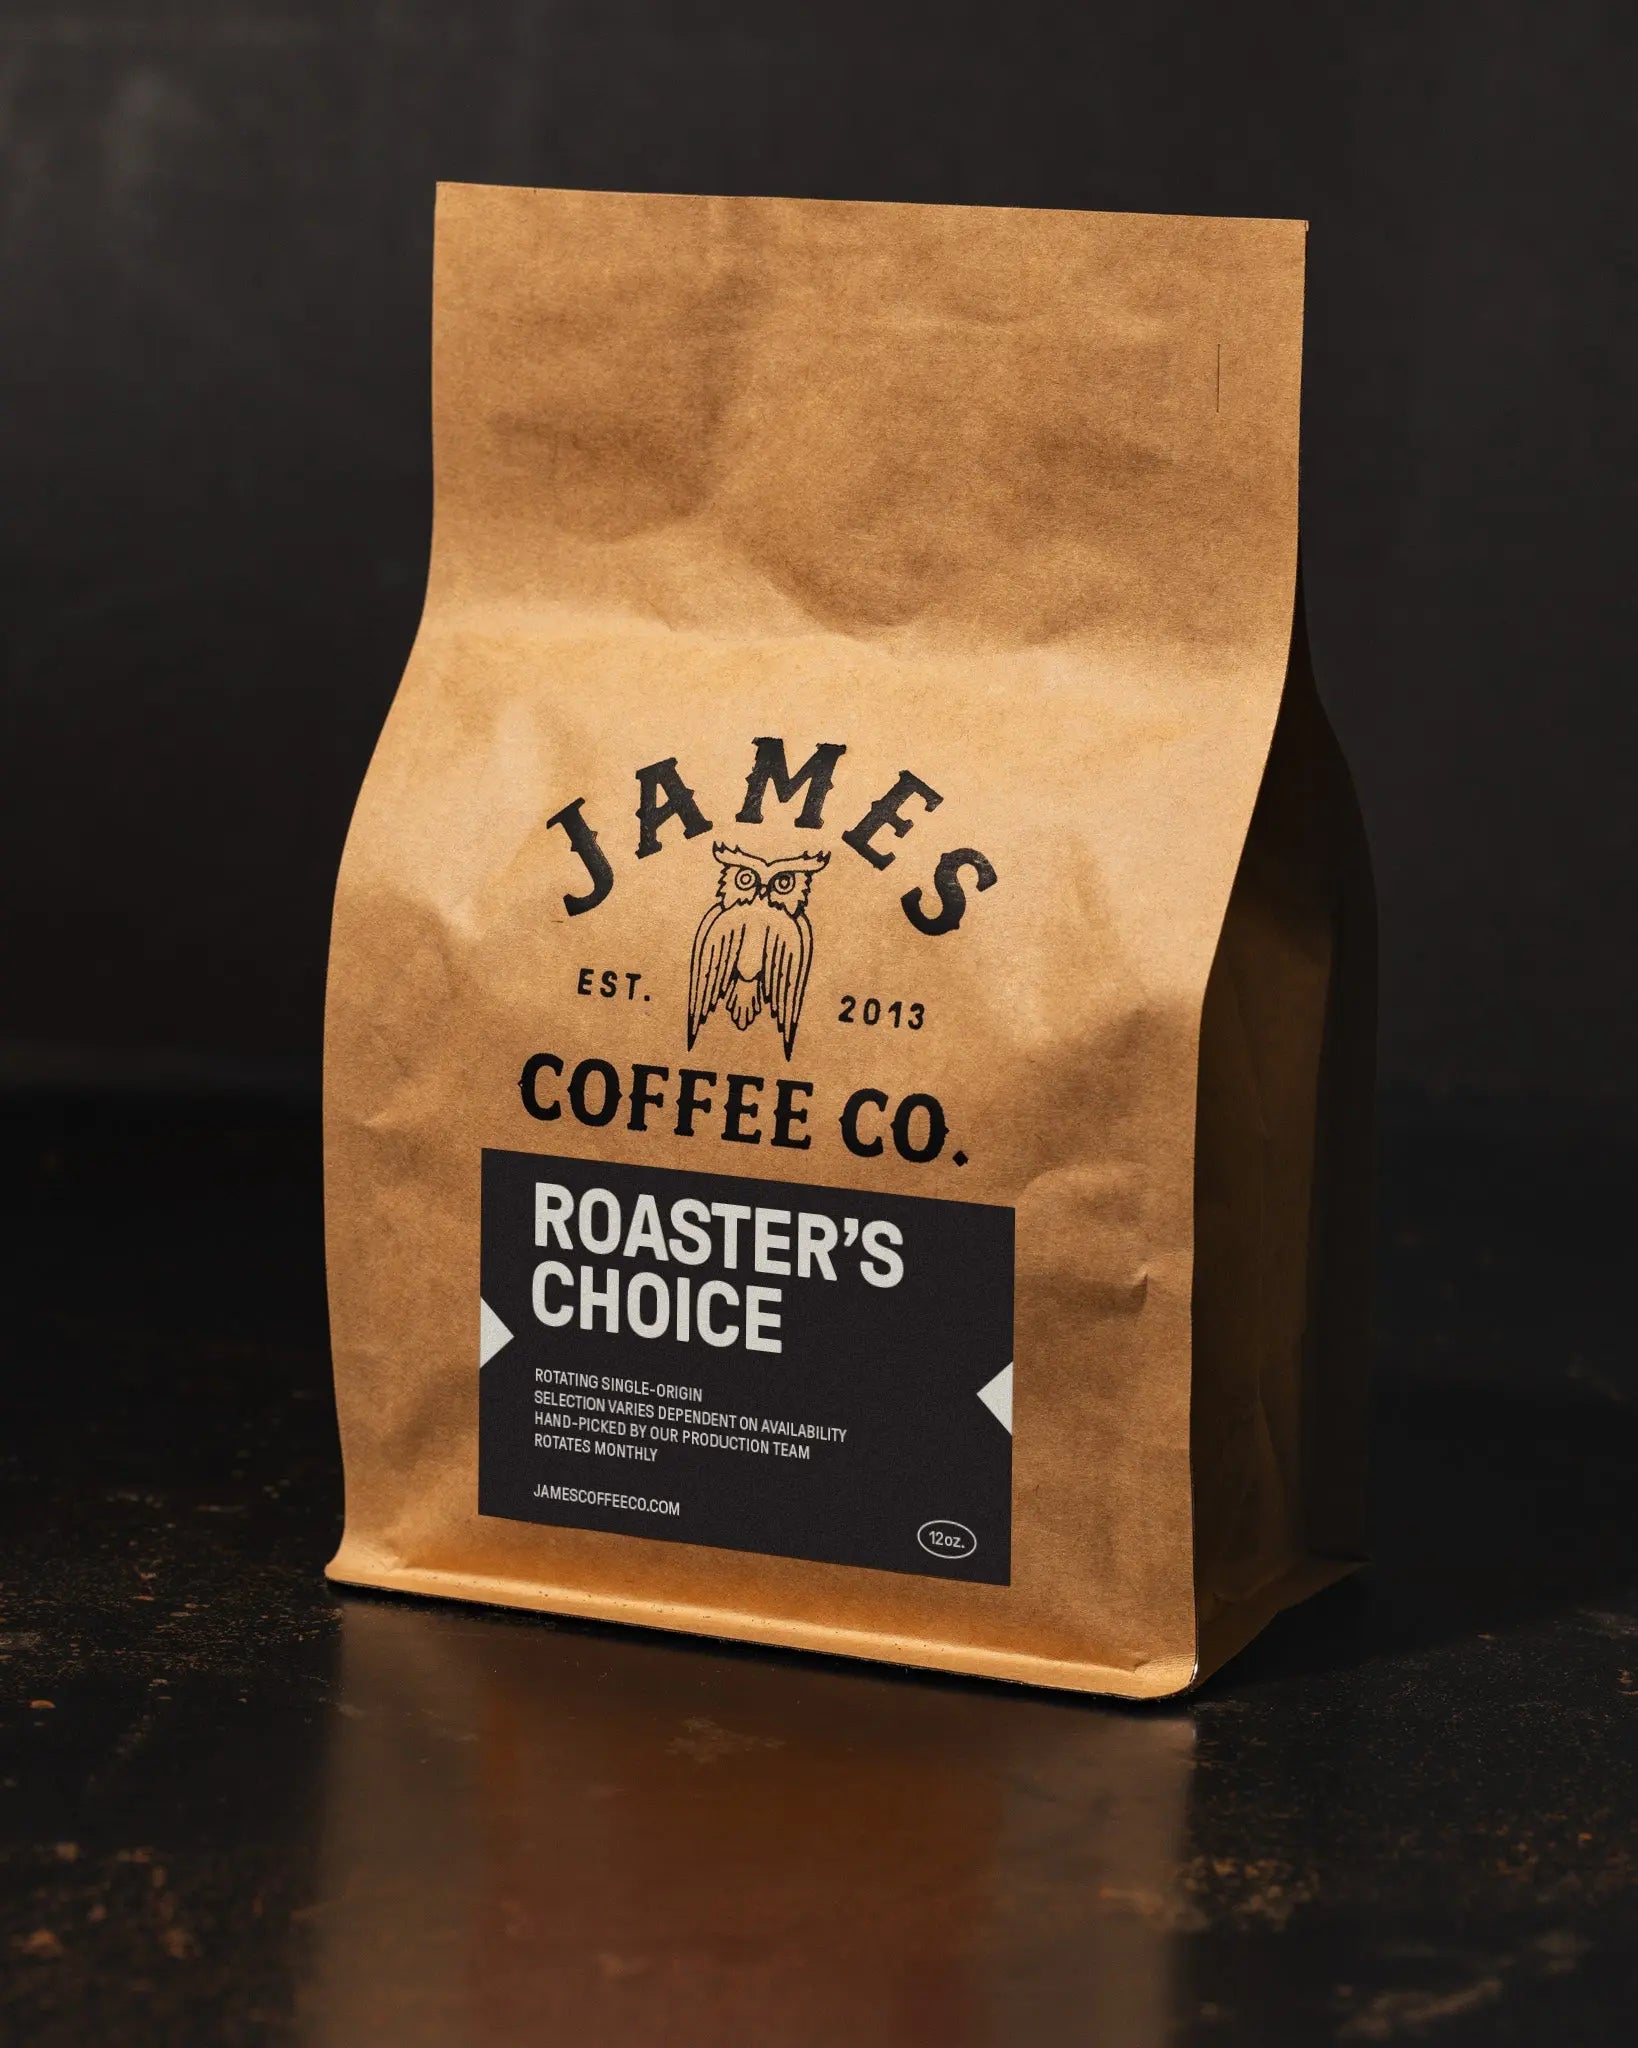 Roaster's Choice James Coffee Co.